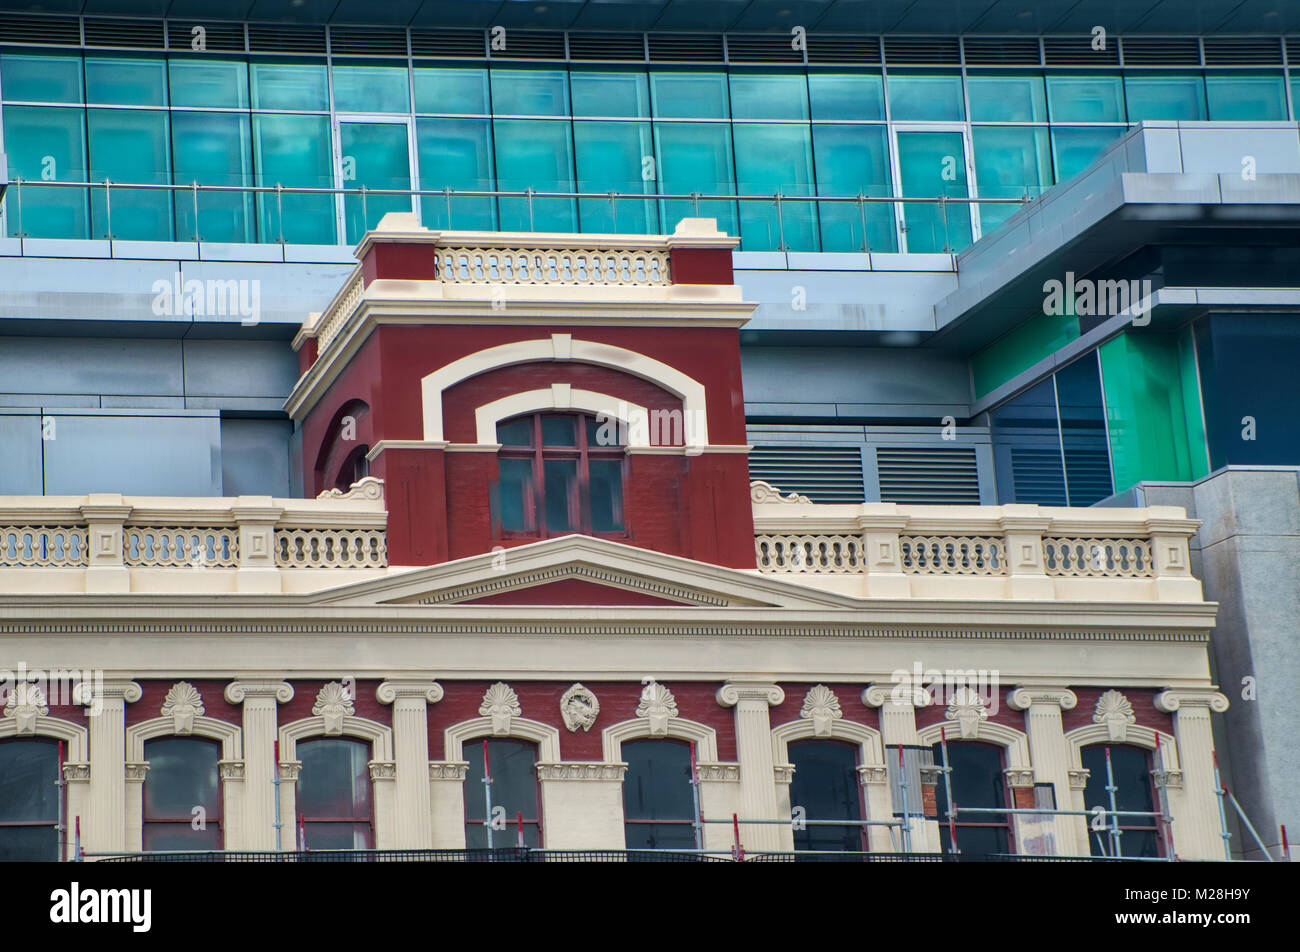 Facelift for Perth CBD Buildings Reveals Amazing Bright Colors in Victorian Architecture buildings. Western Australia Stock Photo